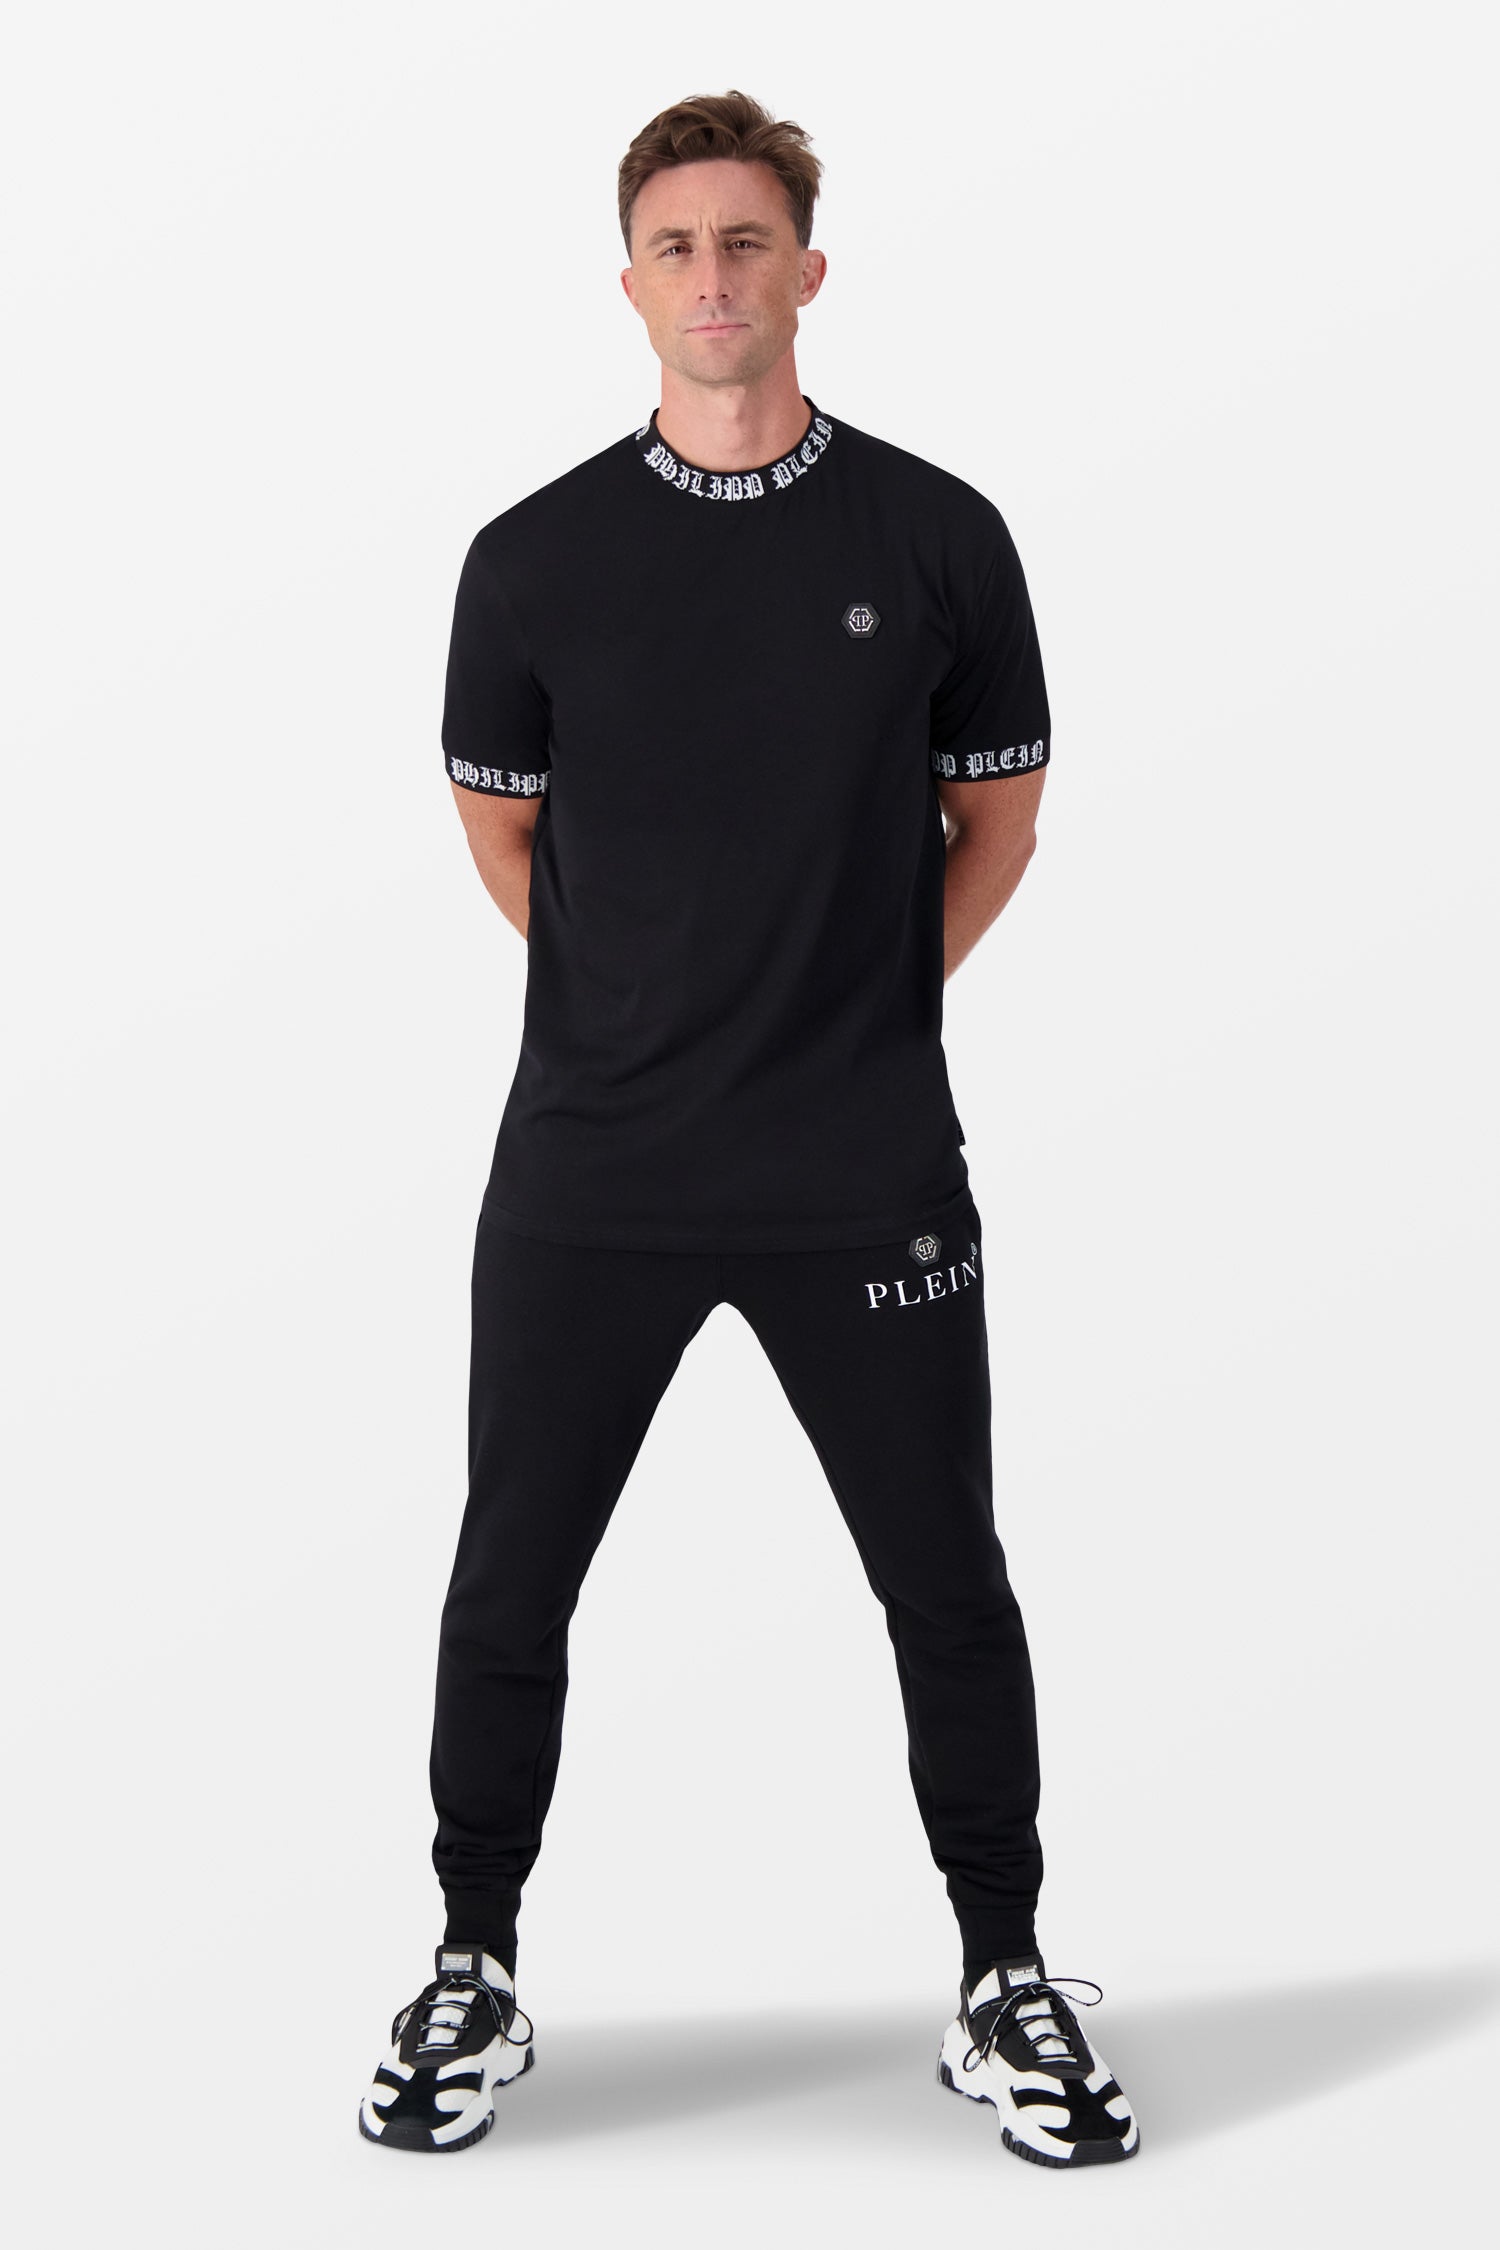 Philipp Plein Black/White Round Neck T-Shirt